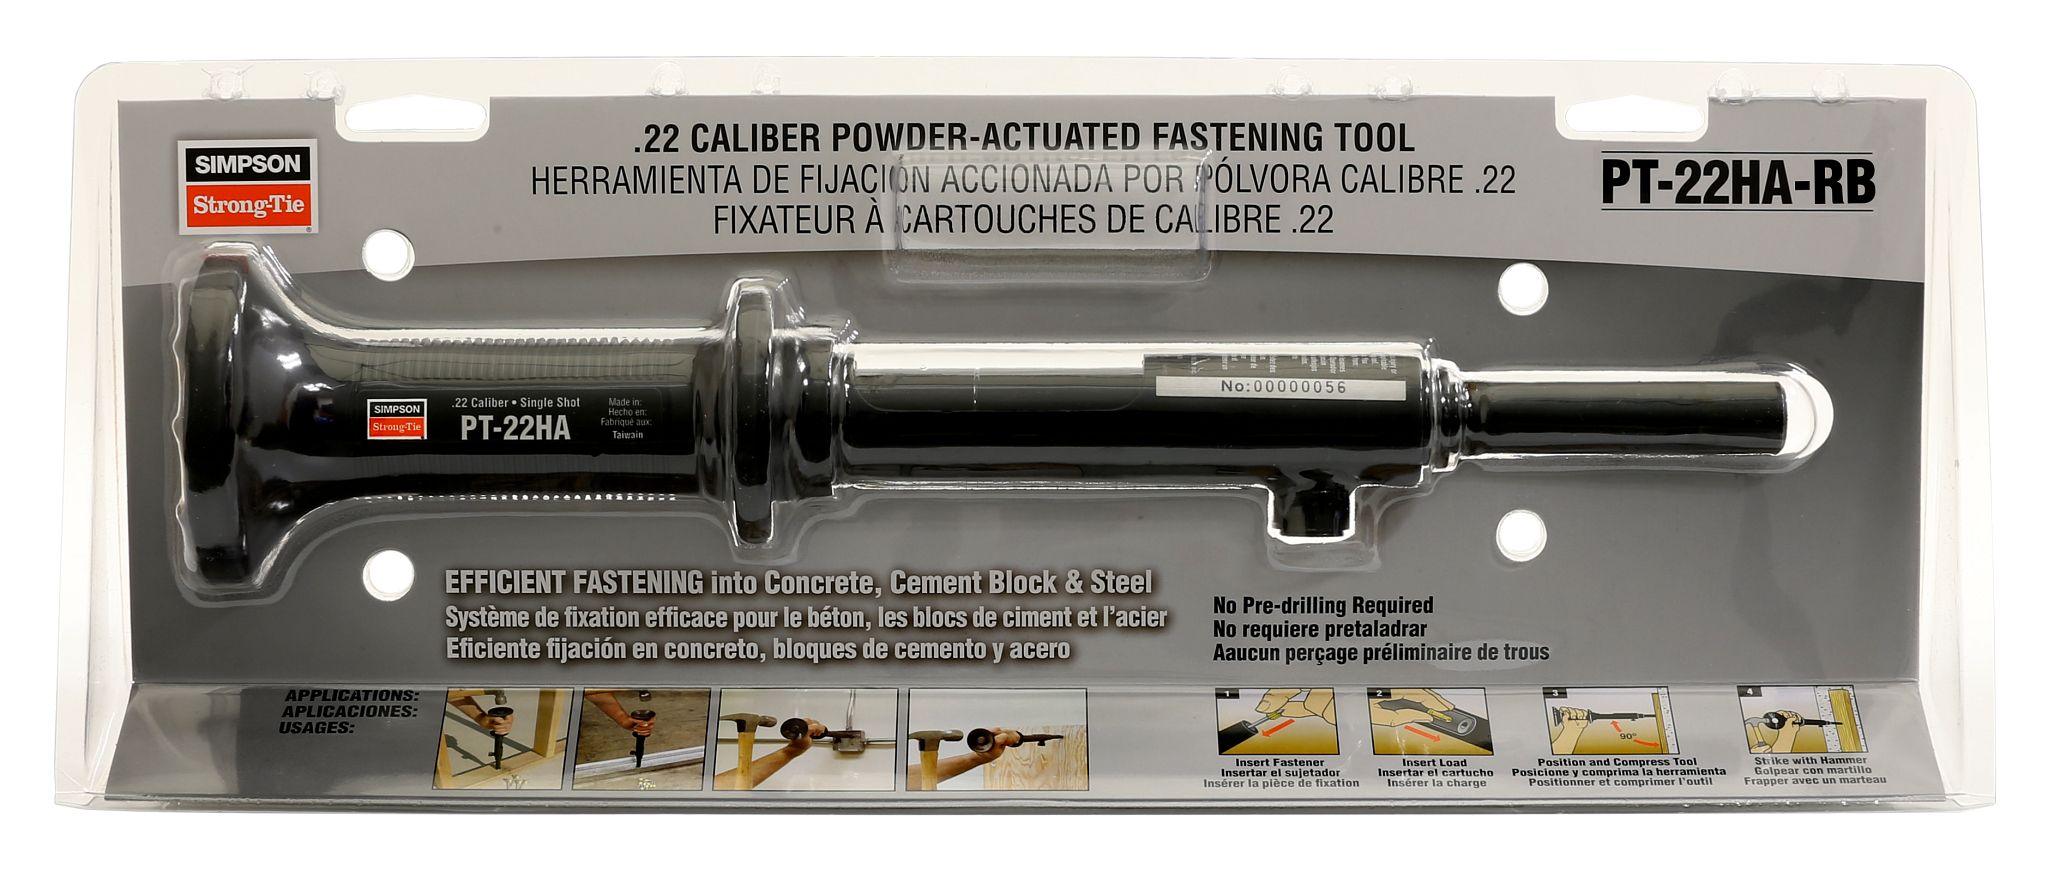 PT-22HA PT-22HA-RB Power Hammer, 0.22 Caliber Drilling